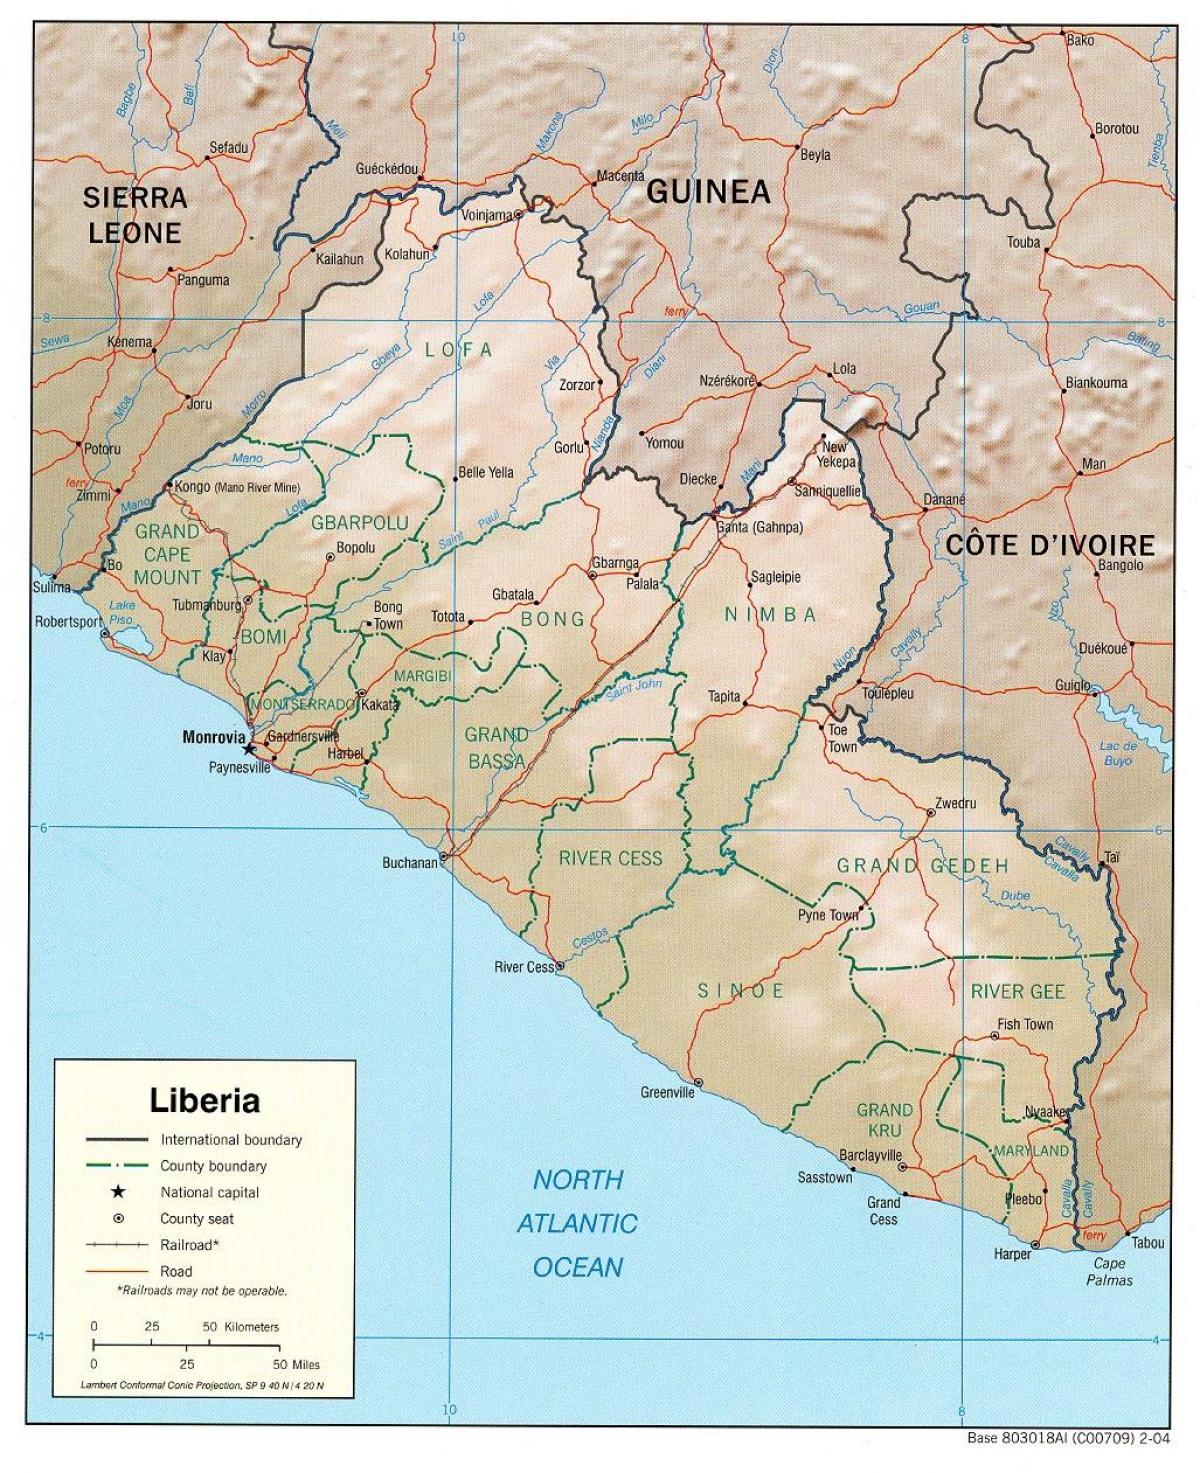 kat jewografik kat jeyografik nan Liberya